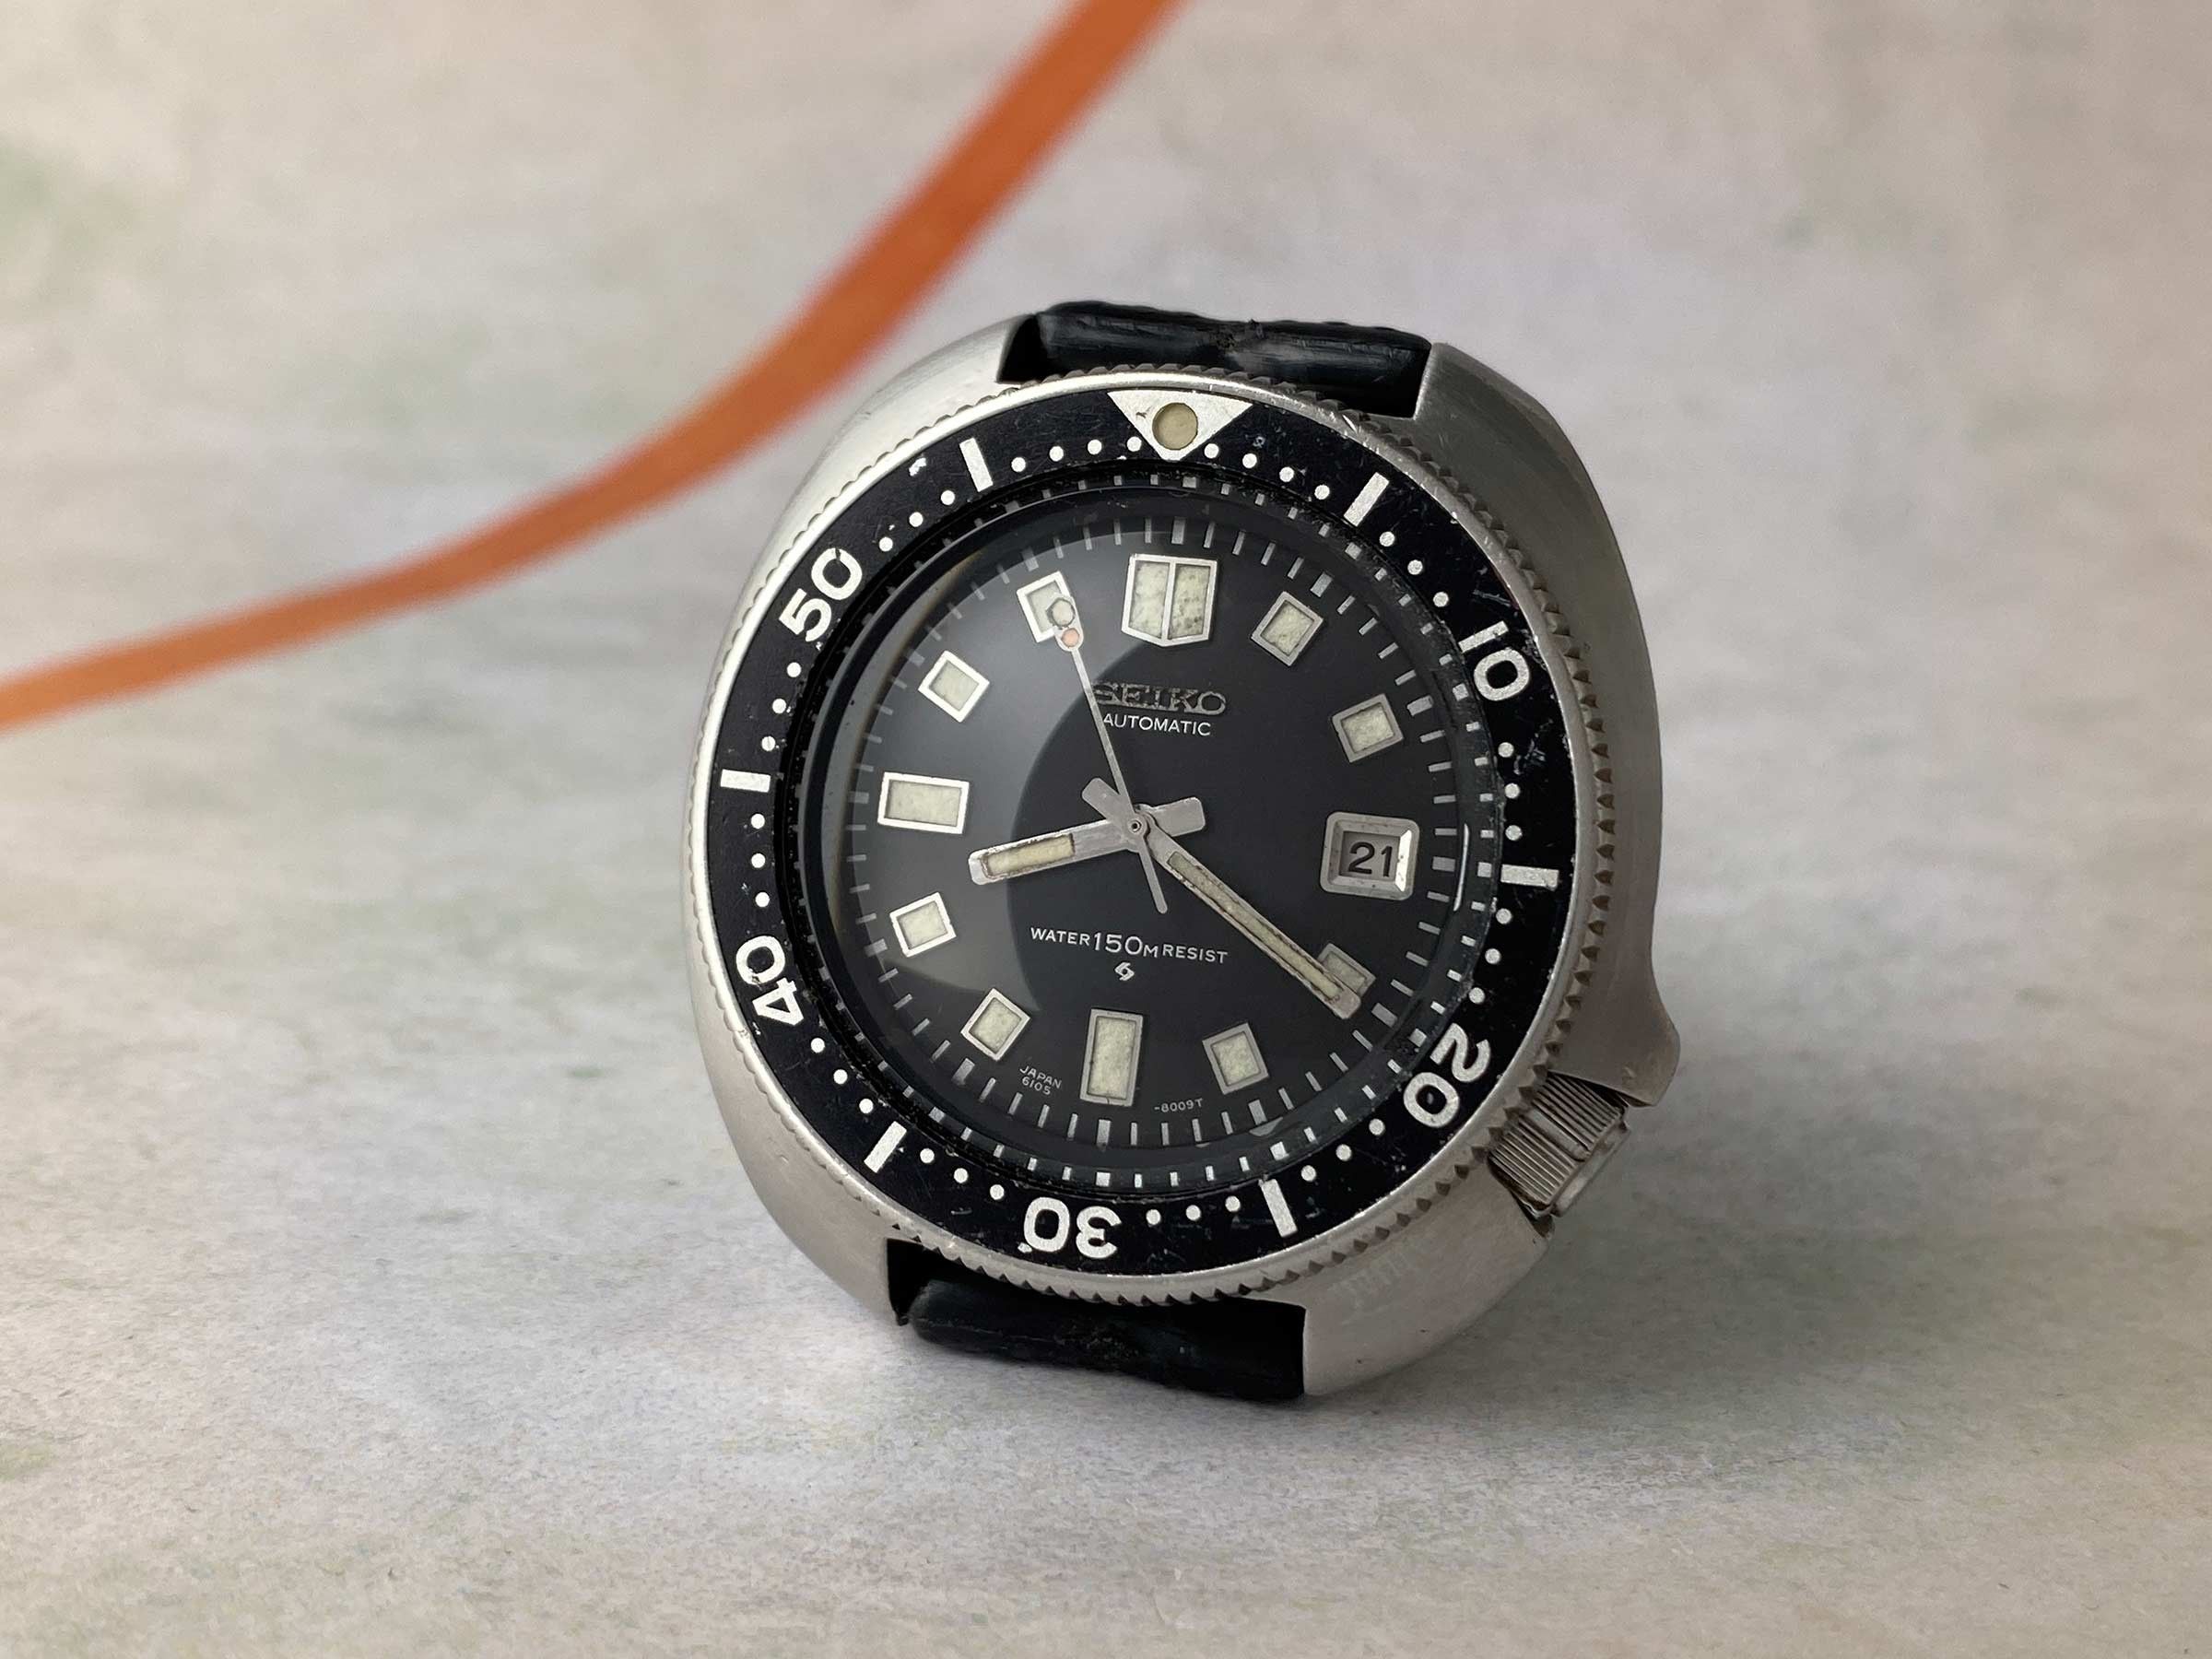 SOLD 1972 Seiko 6105-8110 Divers Watch 'Apocalypse Now' Birth Year Watches  